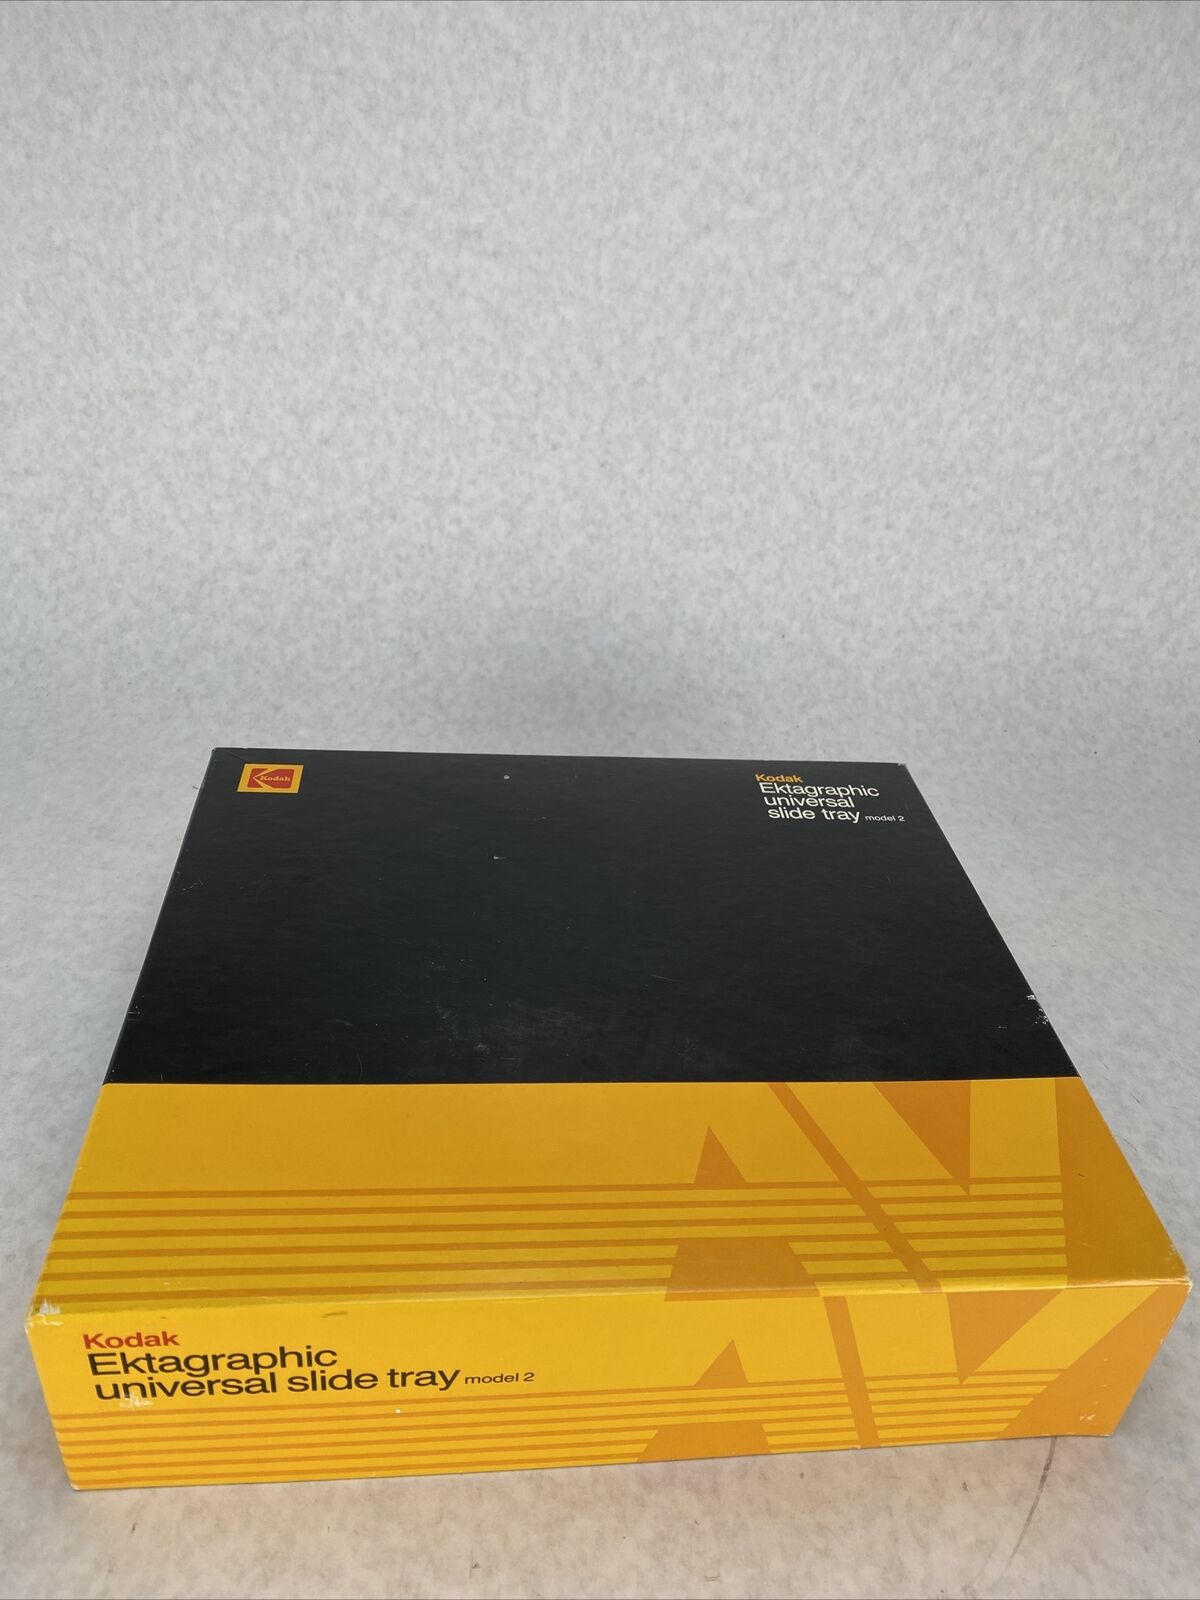 Kodak 144 3266 Ektagraphic Universal Slide Tray Model 2 Holds 80 2" x 2” slides